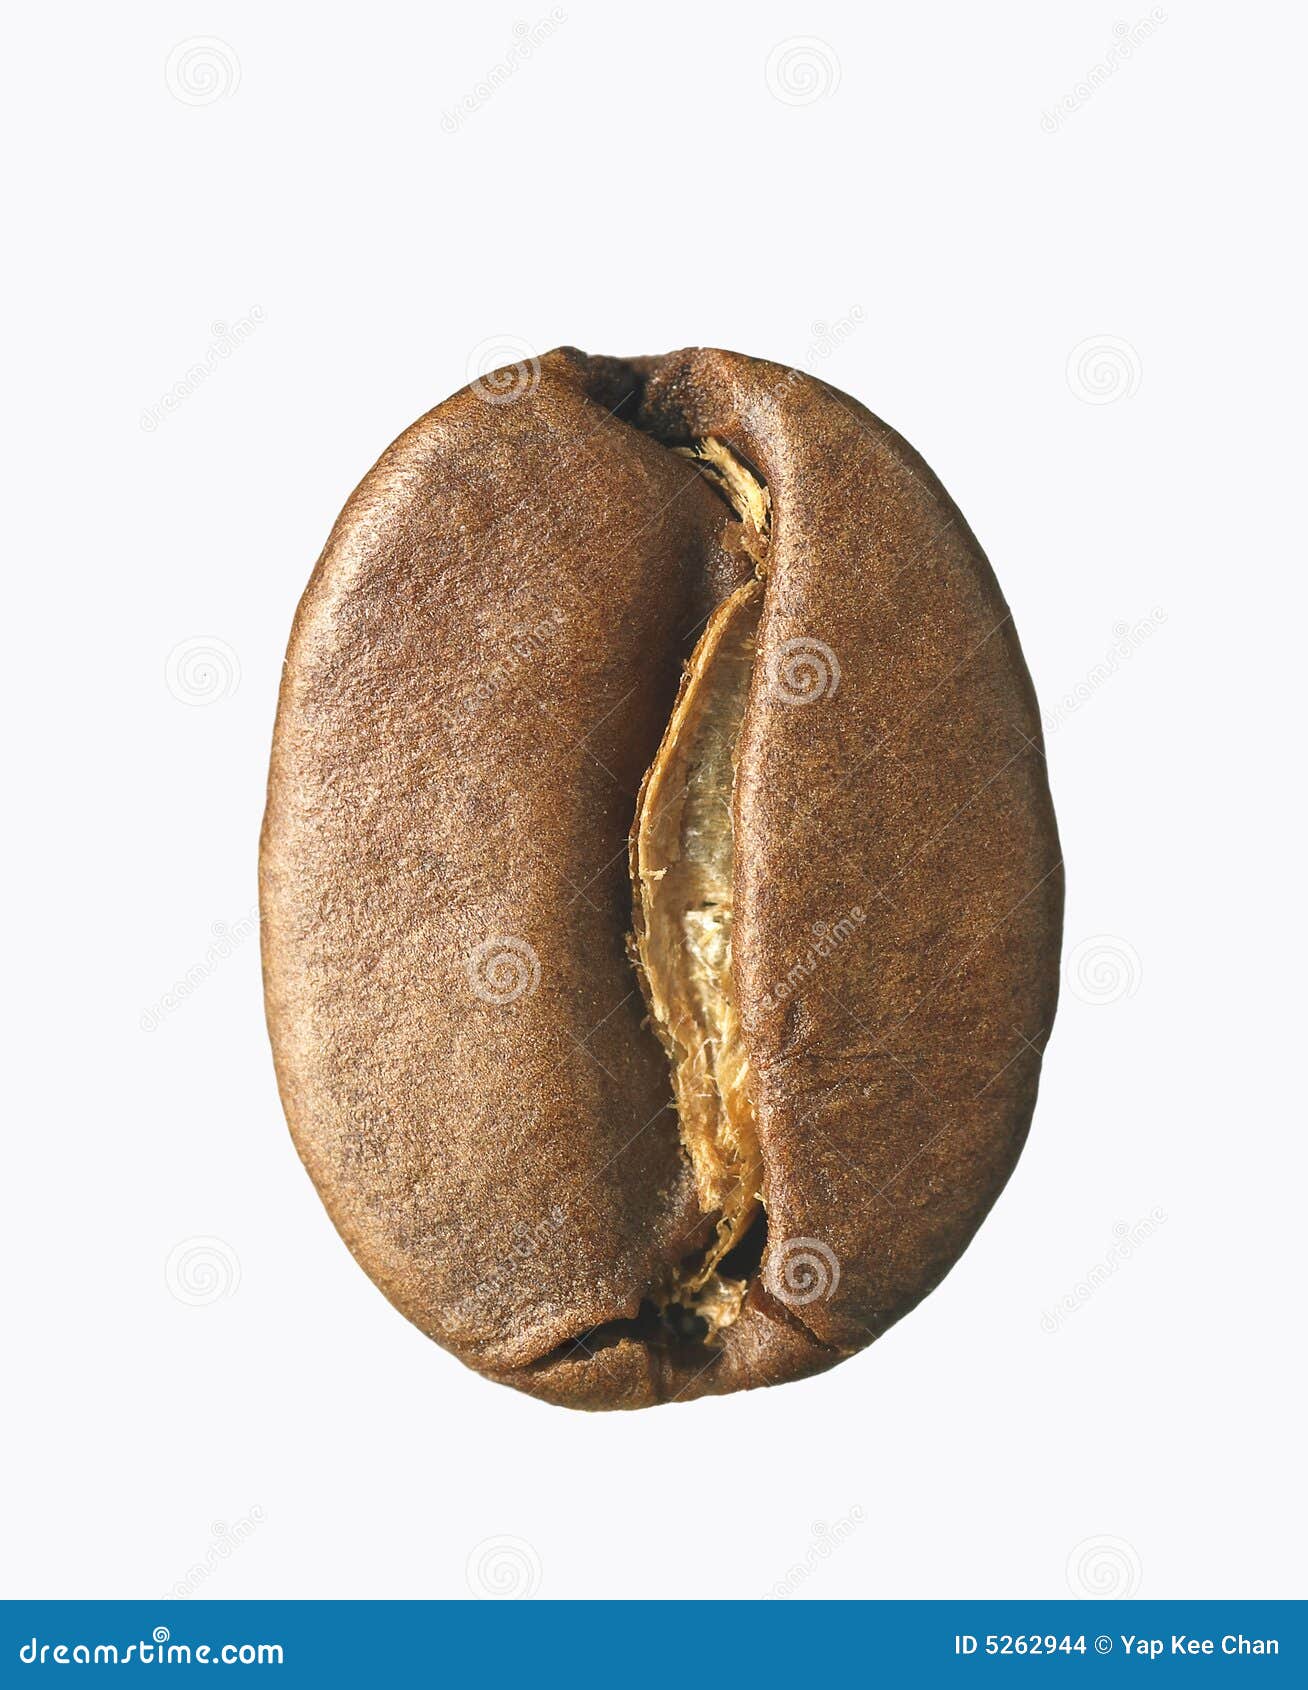 single coffee bean